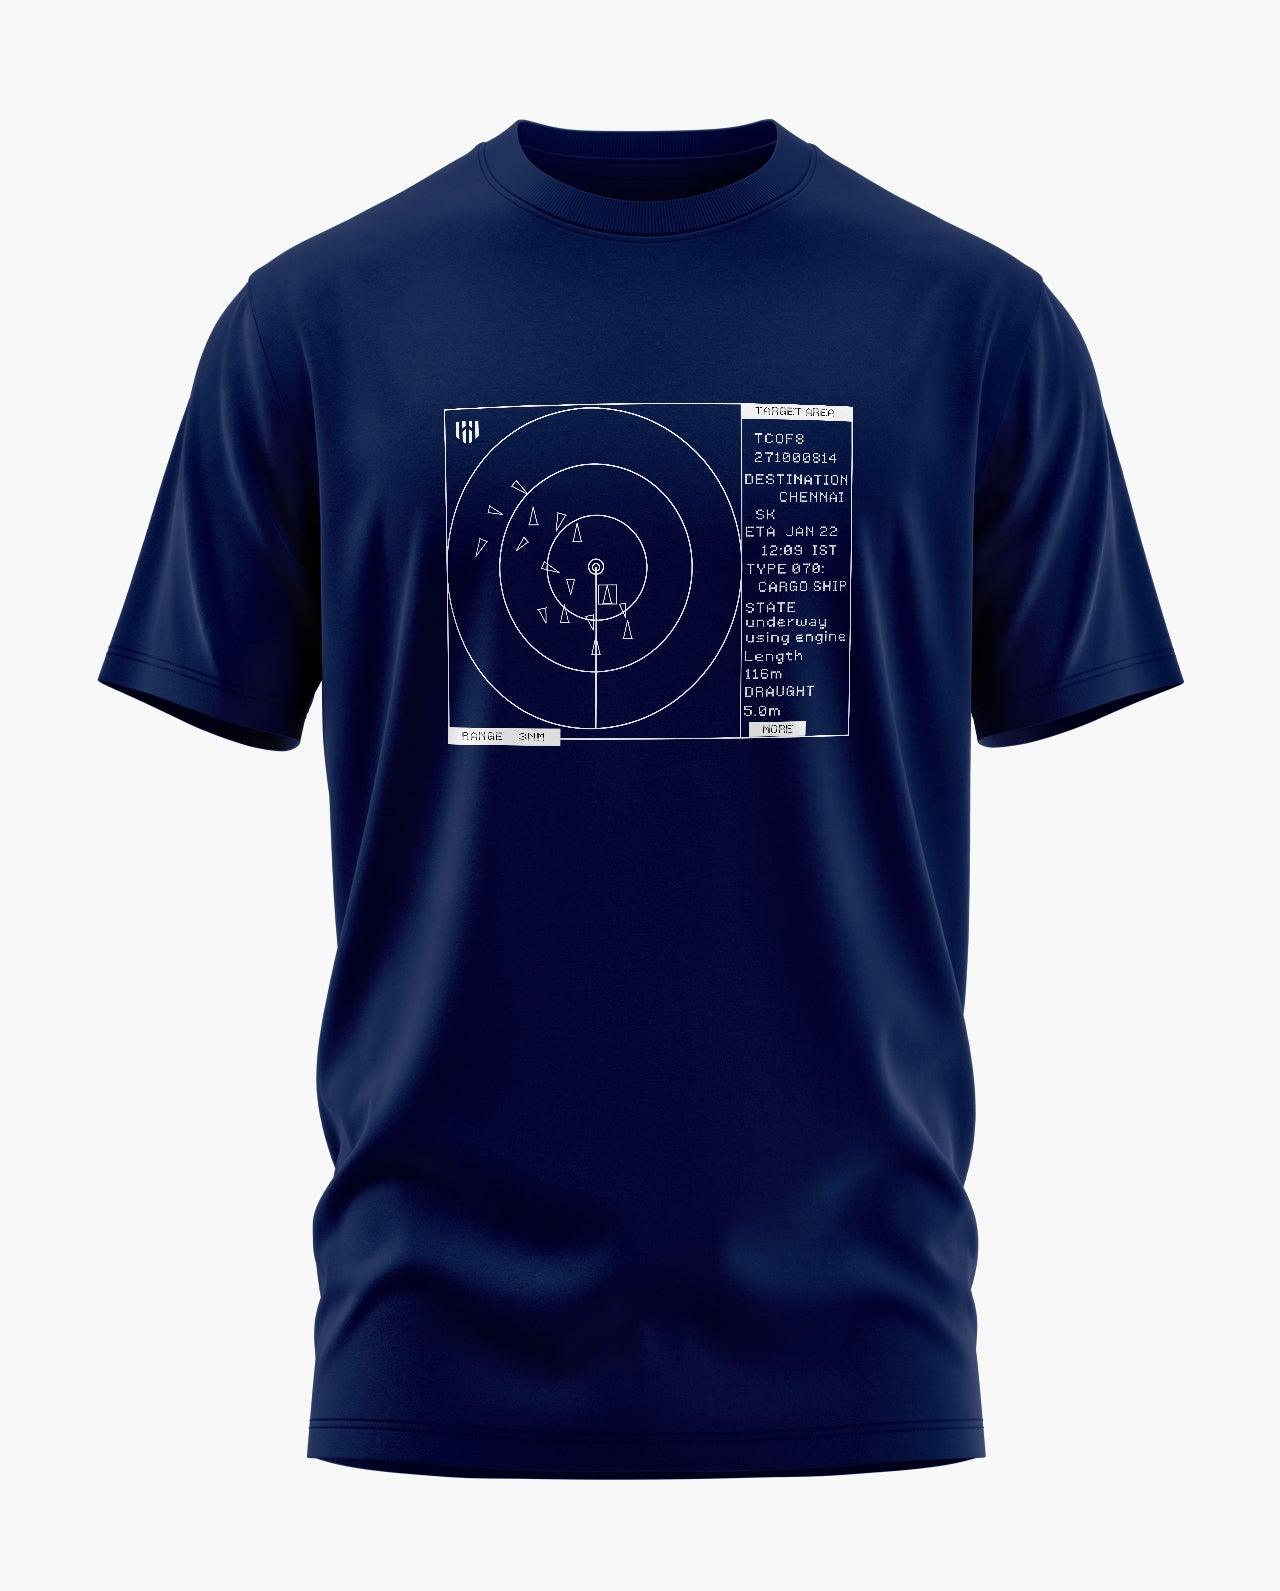 AIS of Ships T-Shirt - Aero Armour